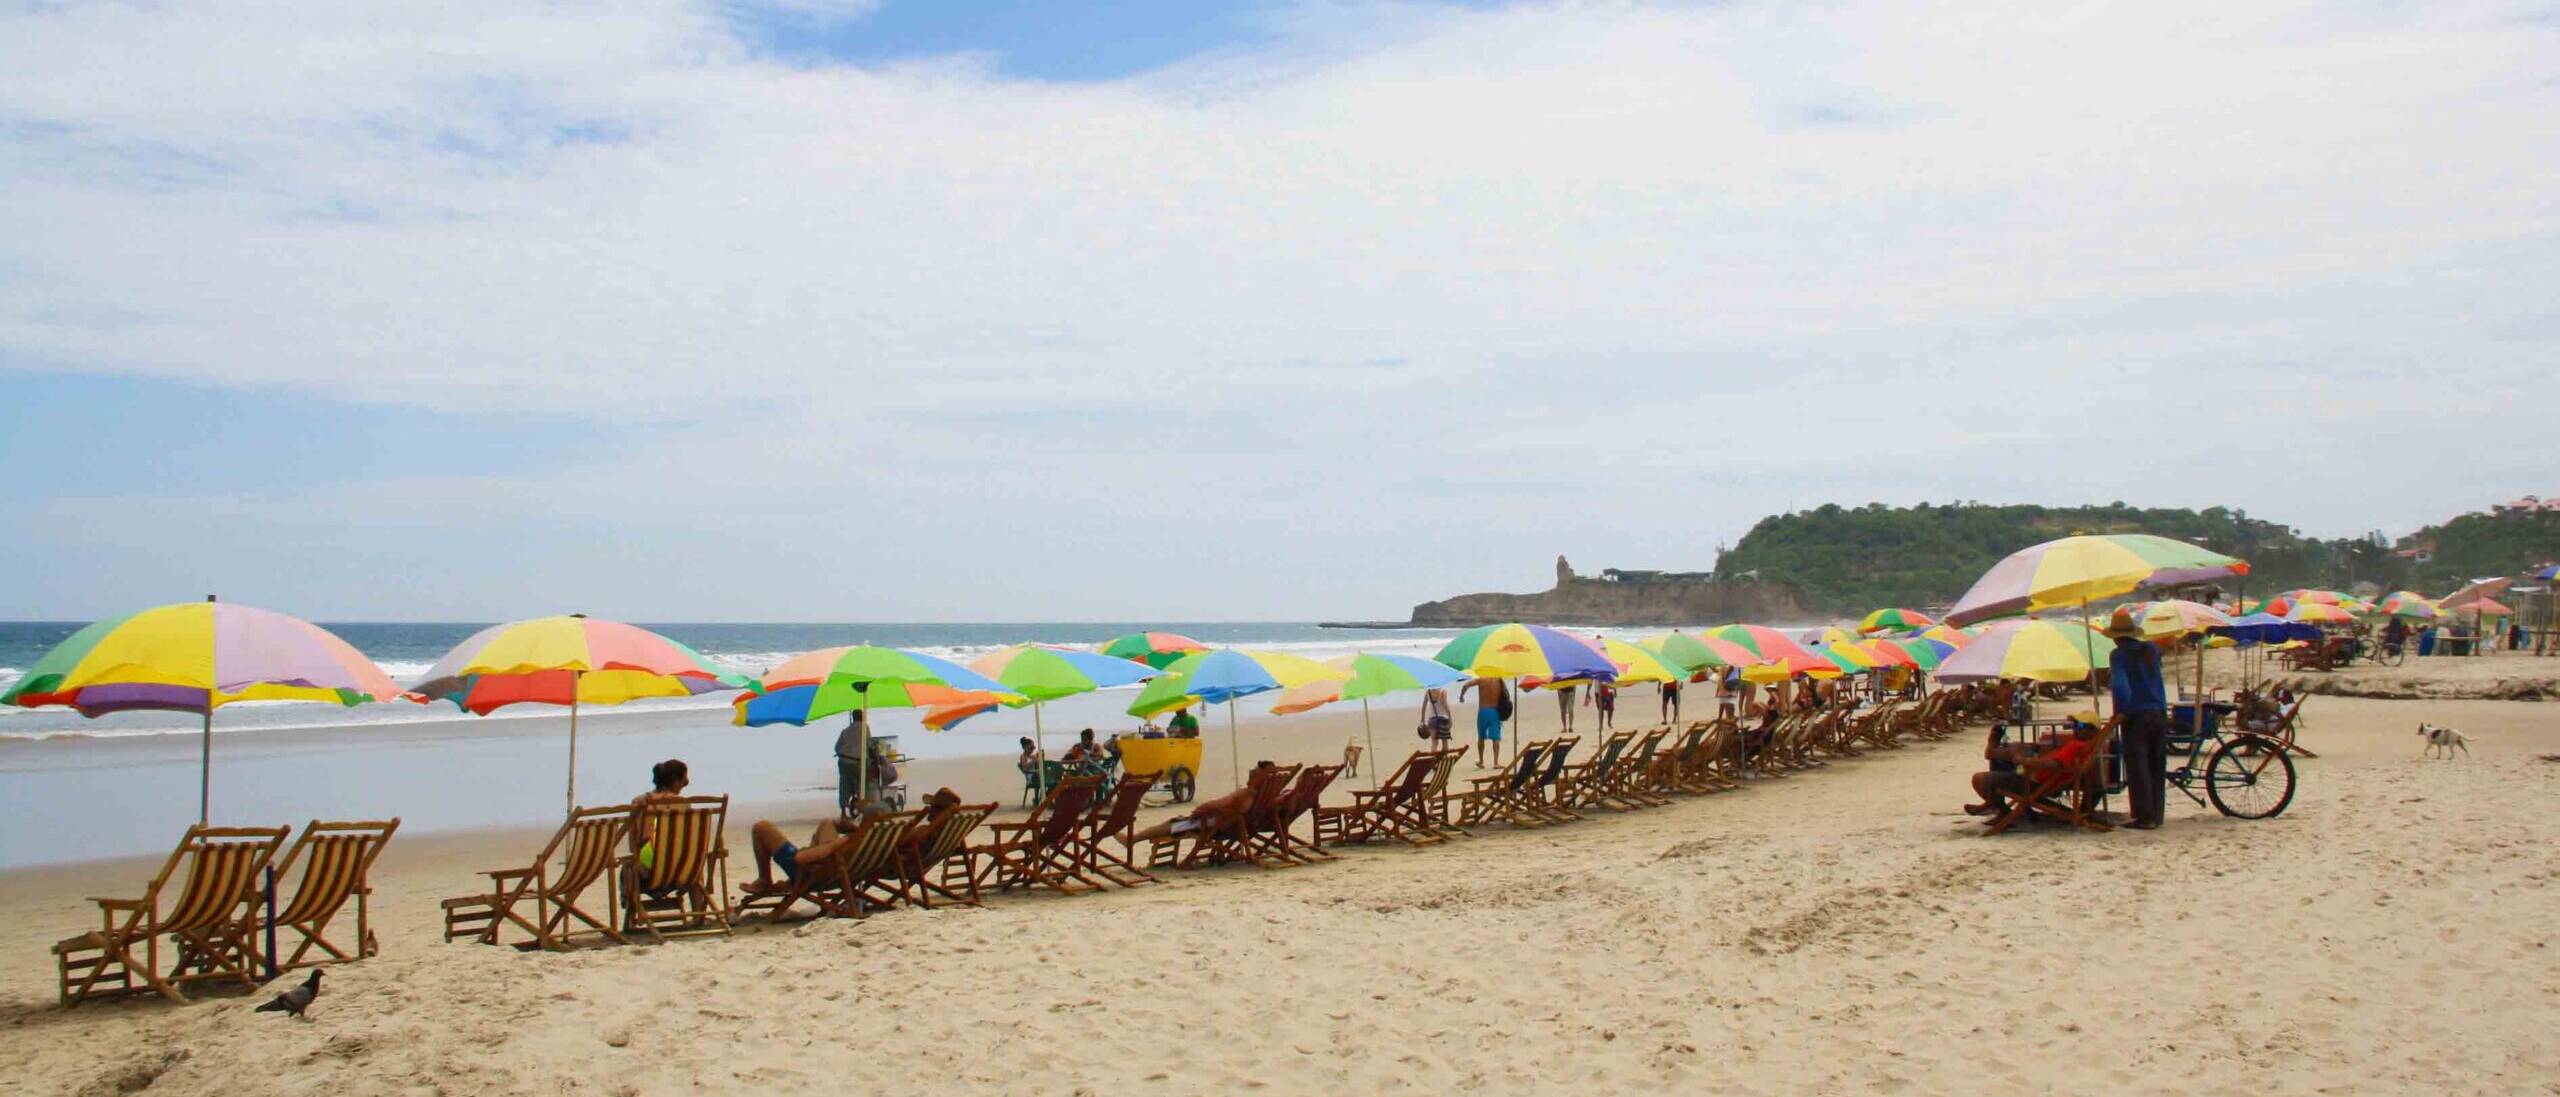 Montanita beach umbrellas